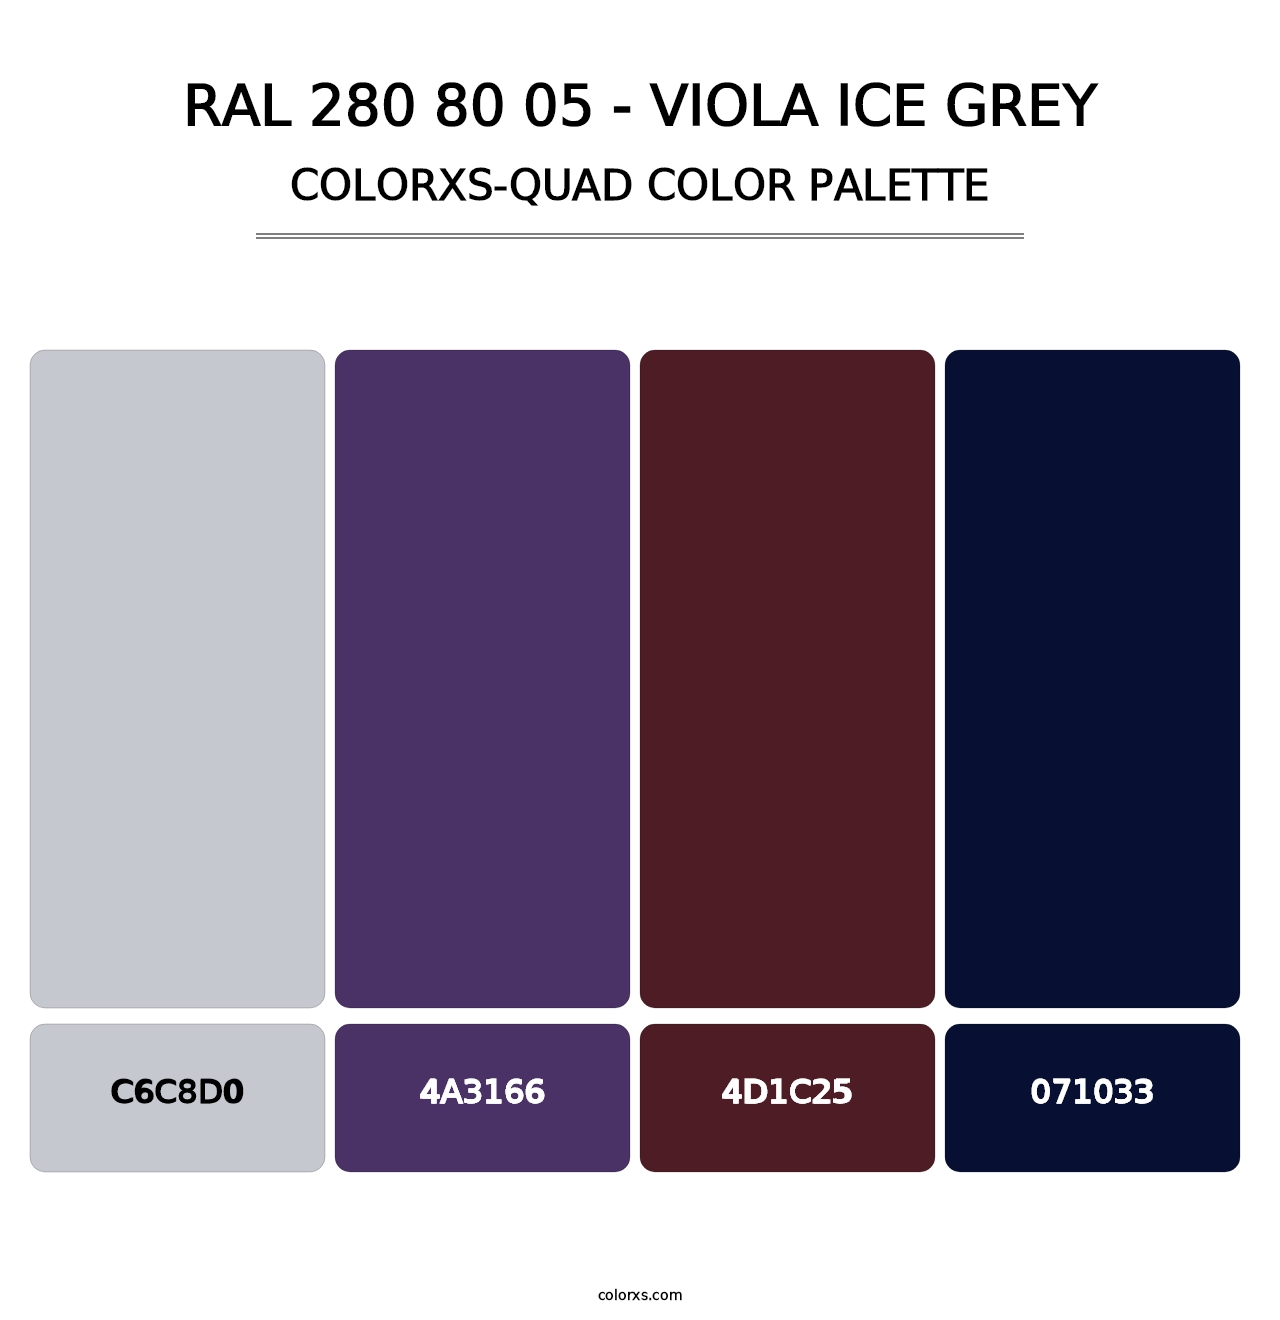 RAL 280 80 05 - Viola Ice Grey - Colorxs Quad Palette